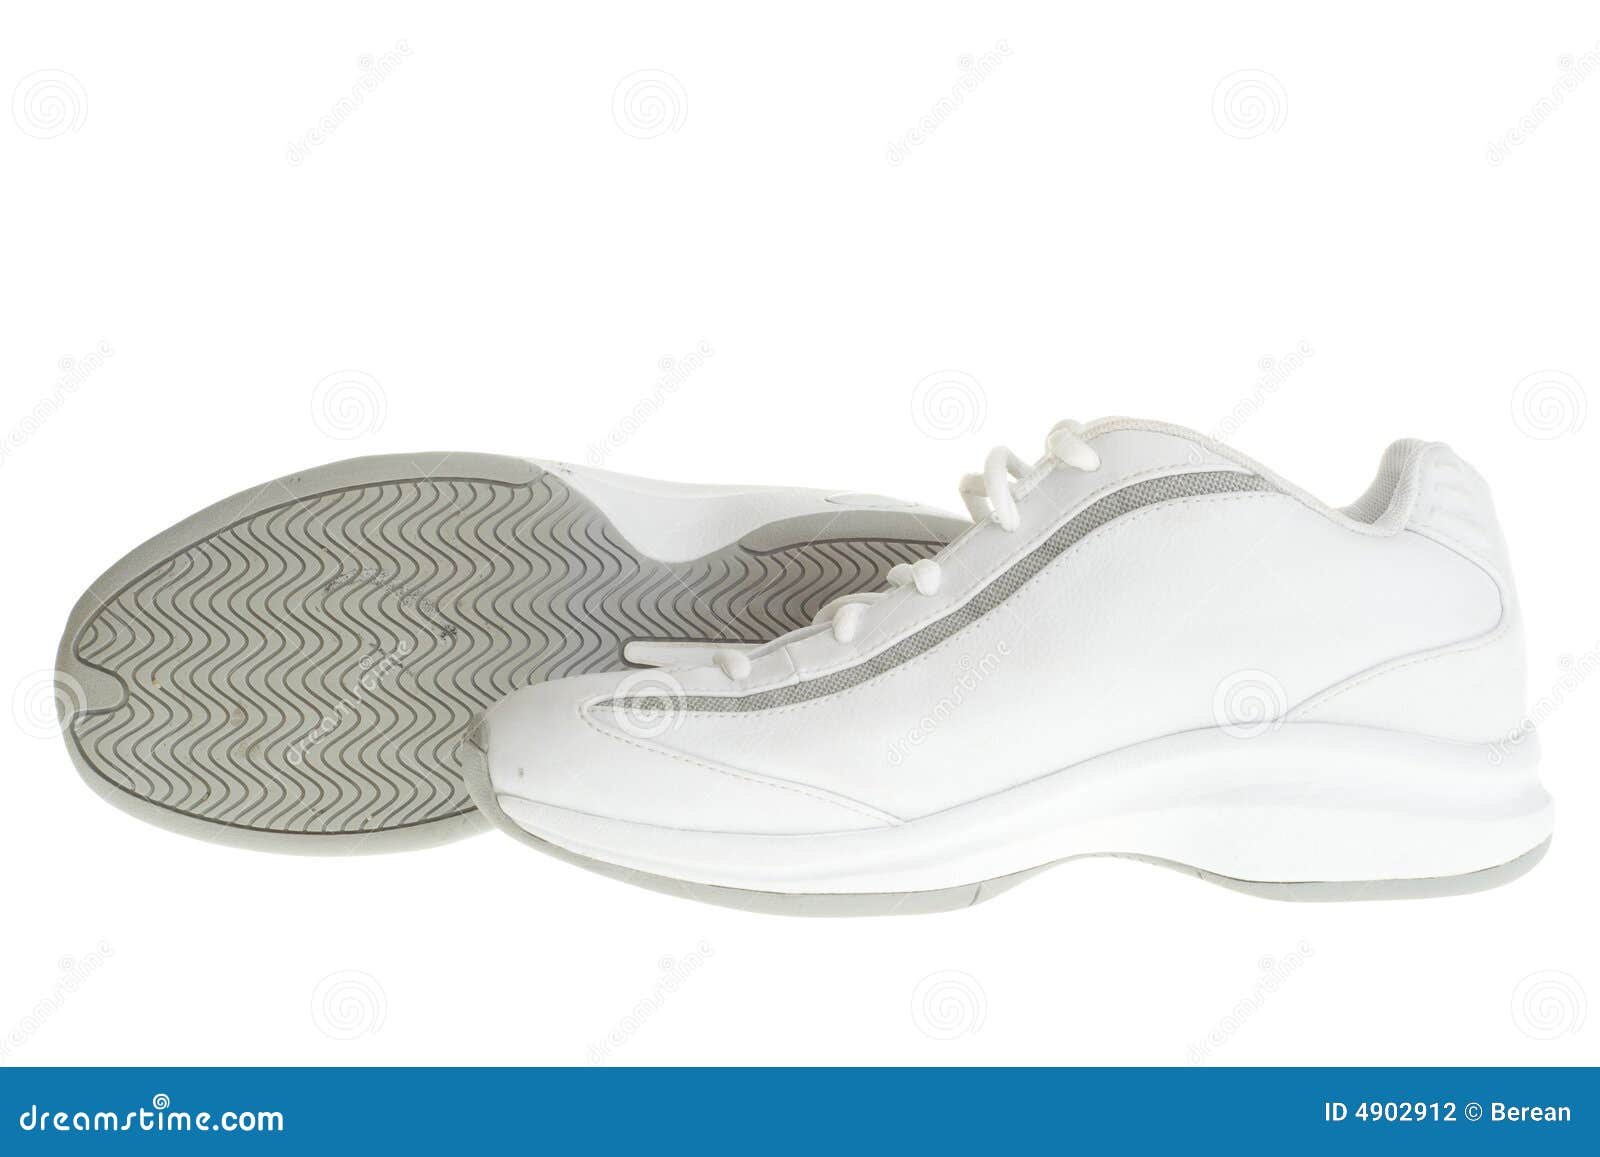 Basketball shoe pair stock photo. Image of shoes, training - 4902912